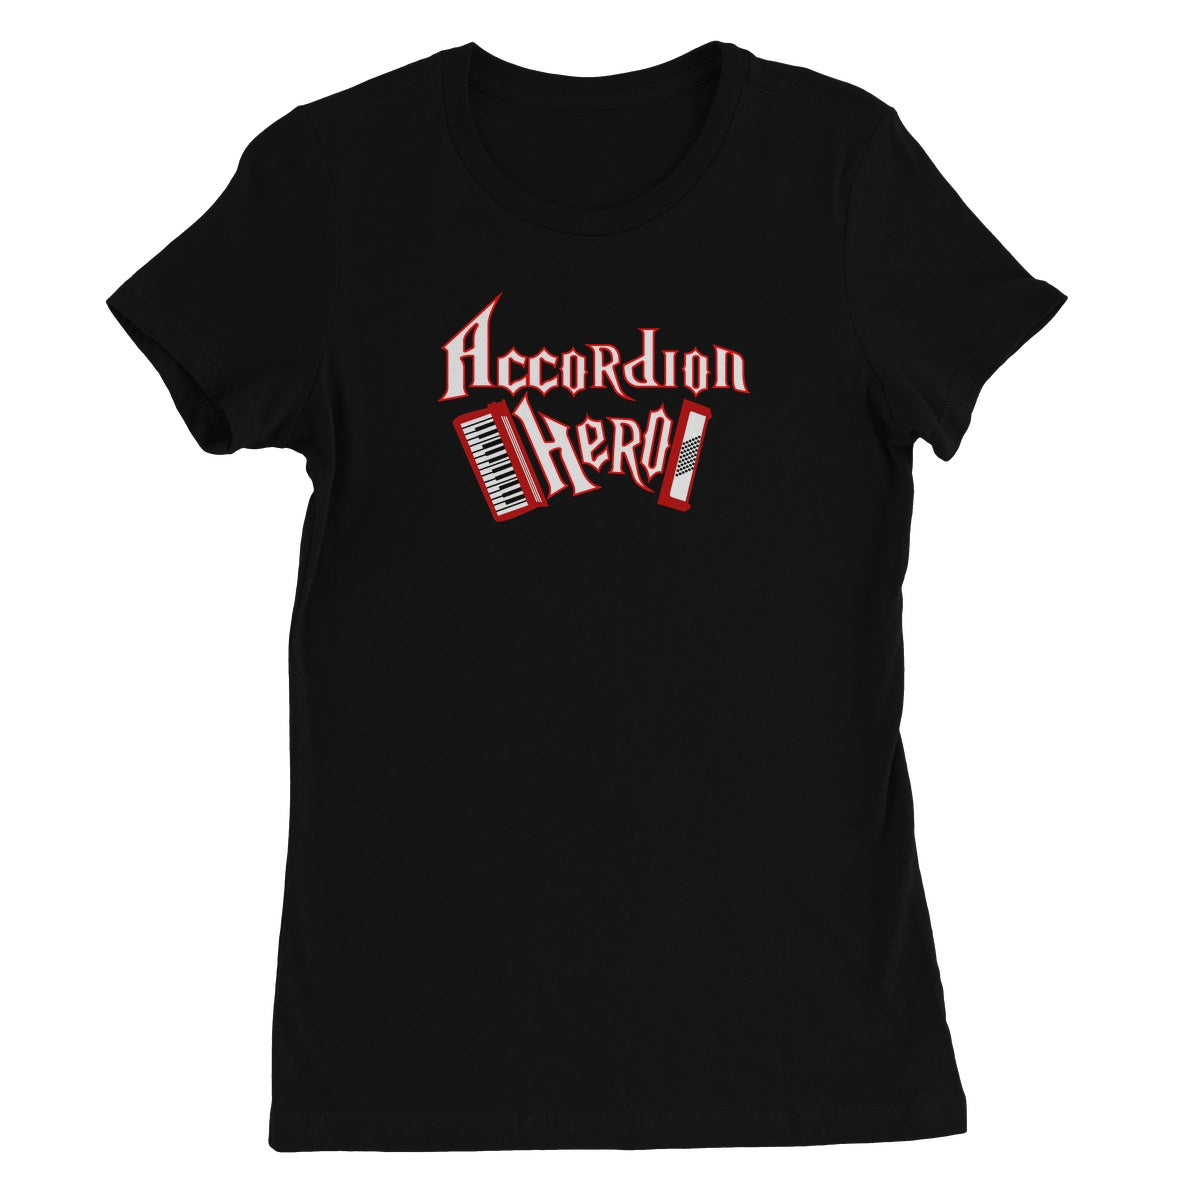 Accordion Hero Women's T-Shirt